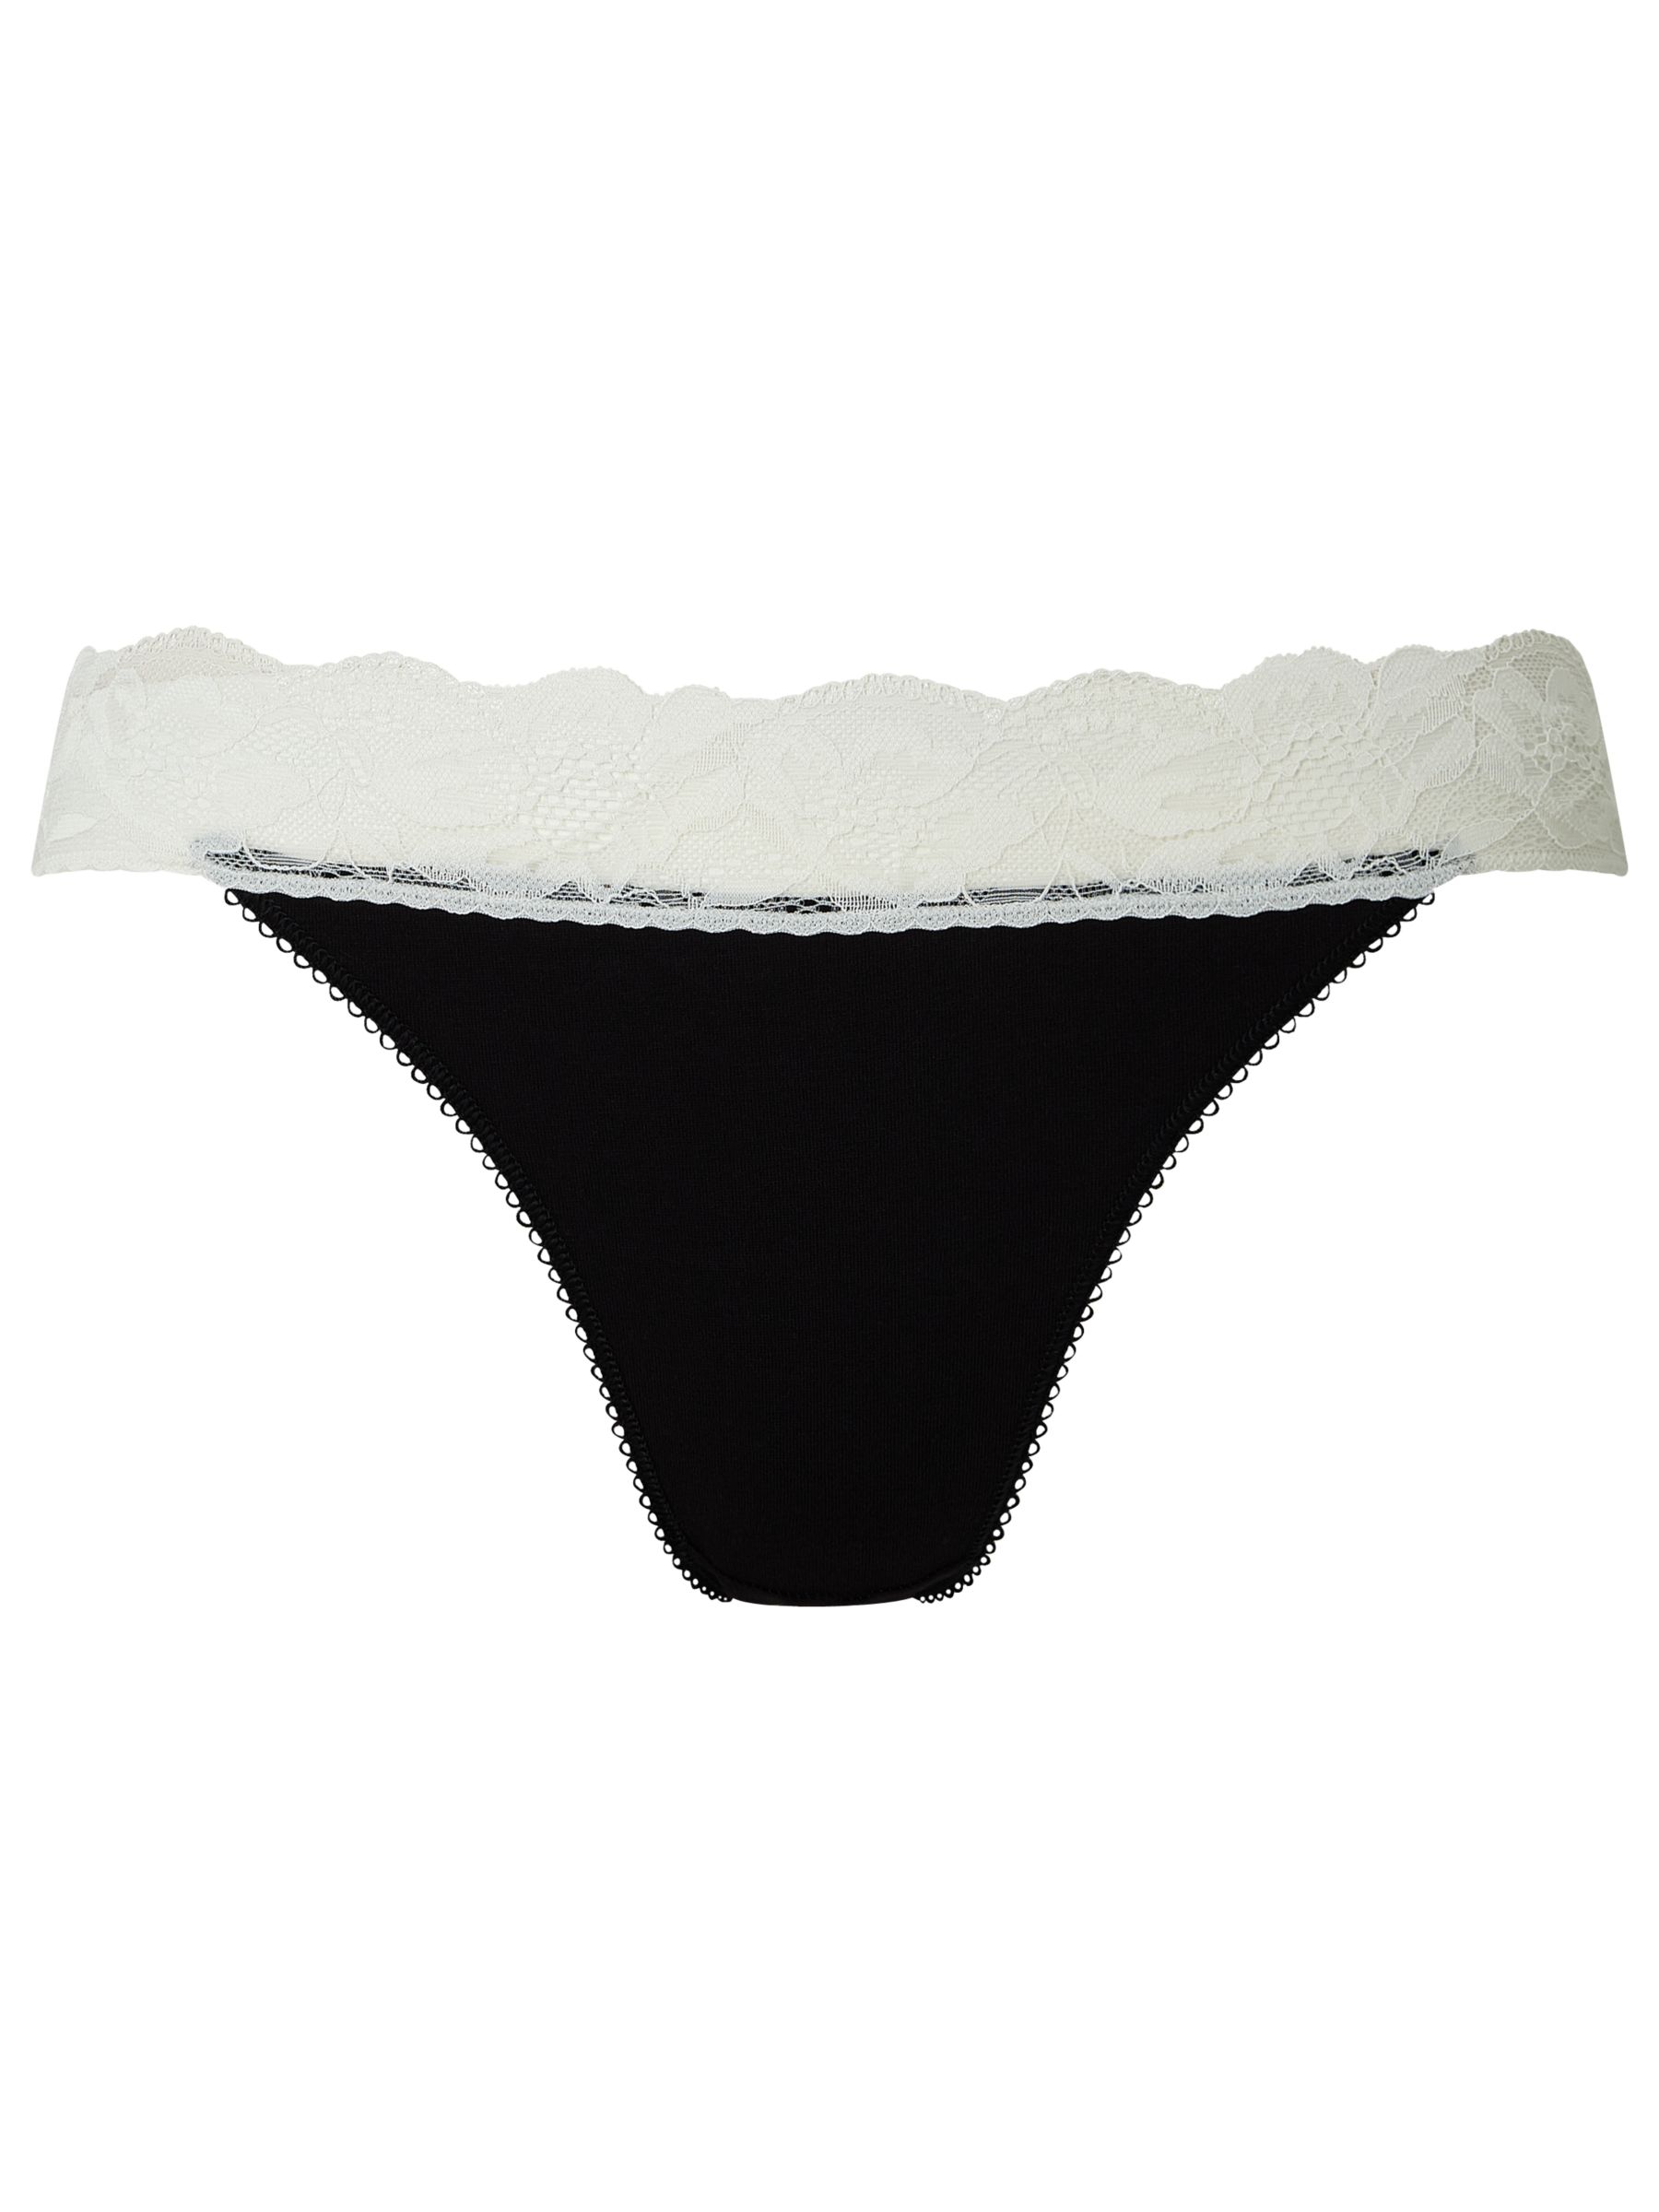 dais Daily Underwear, Brazilian Lace